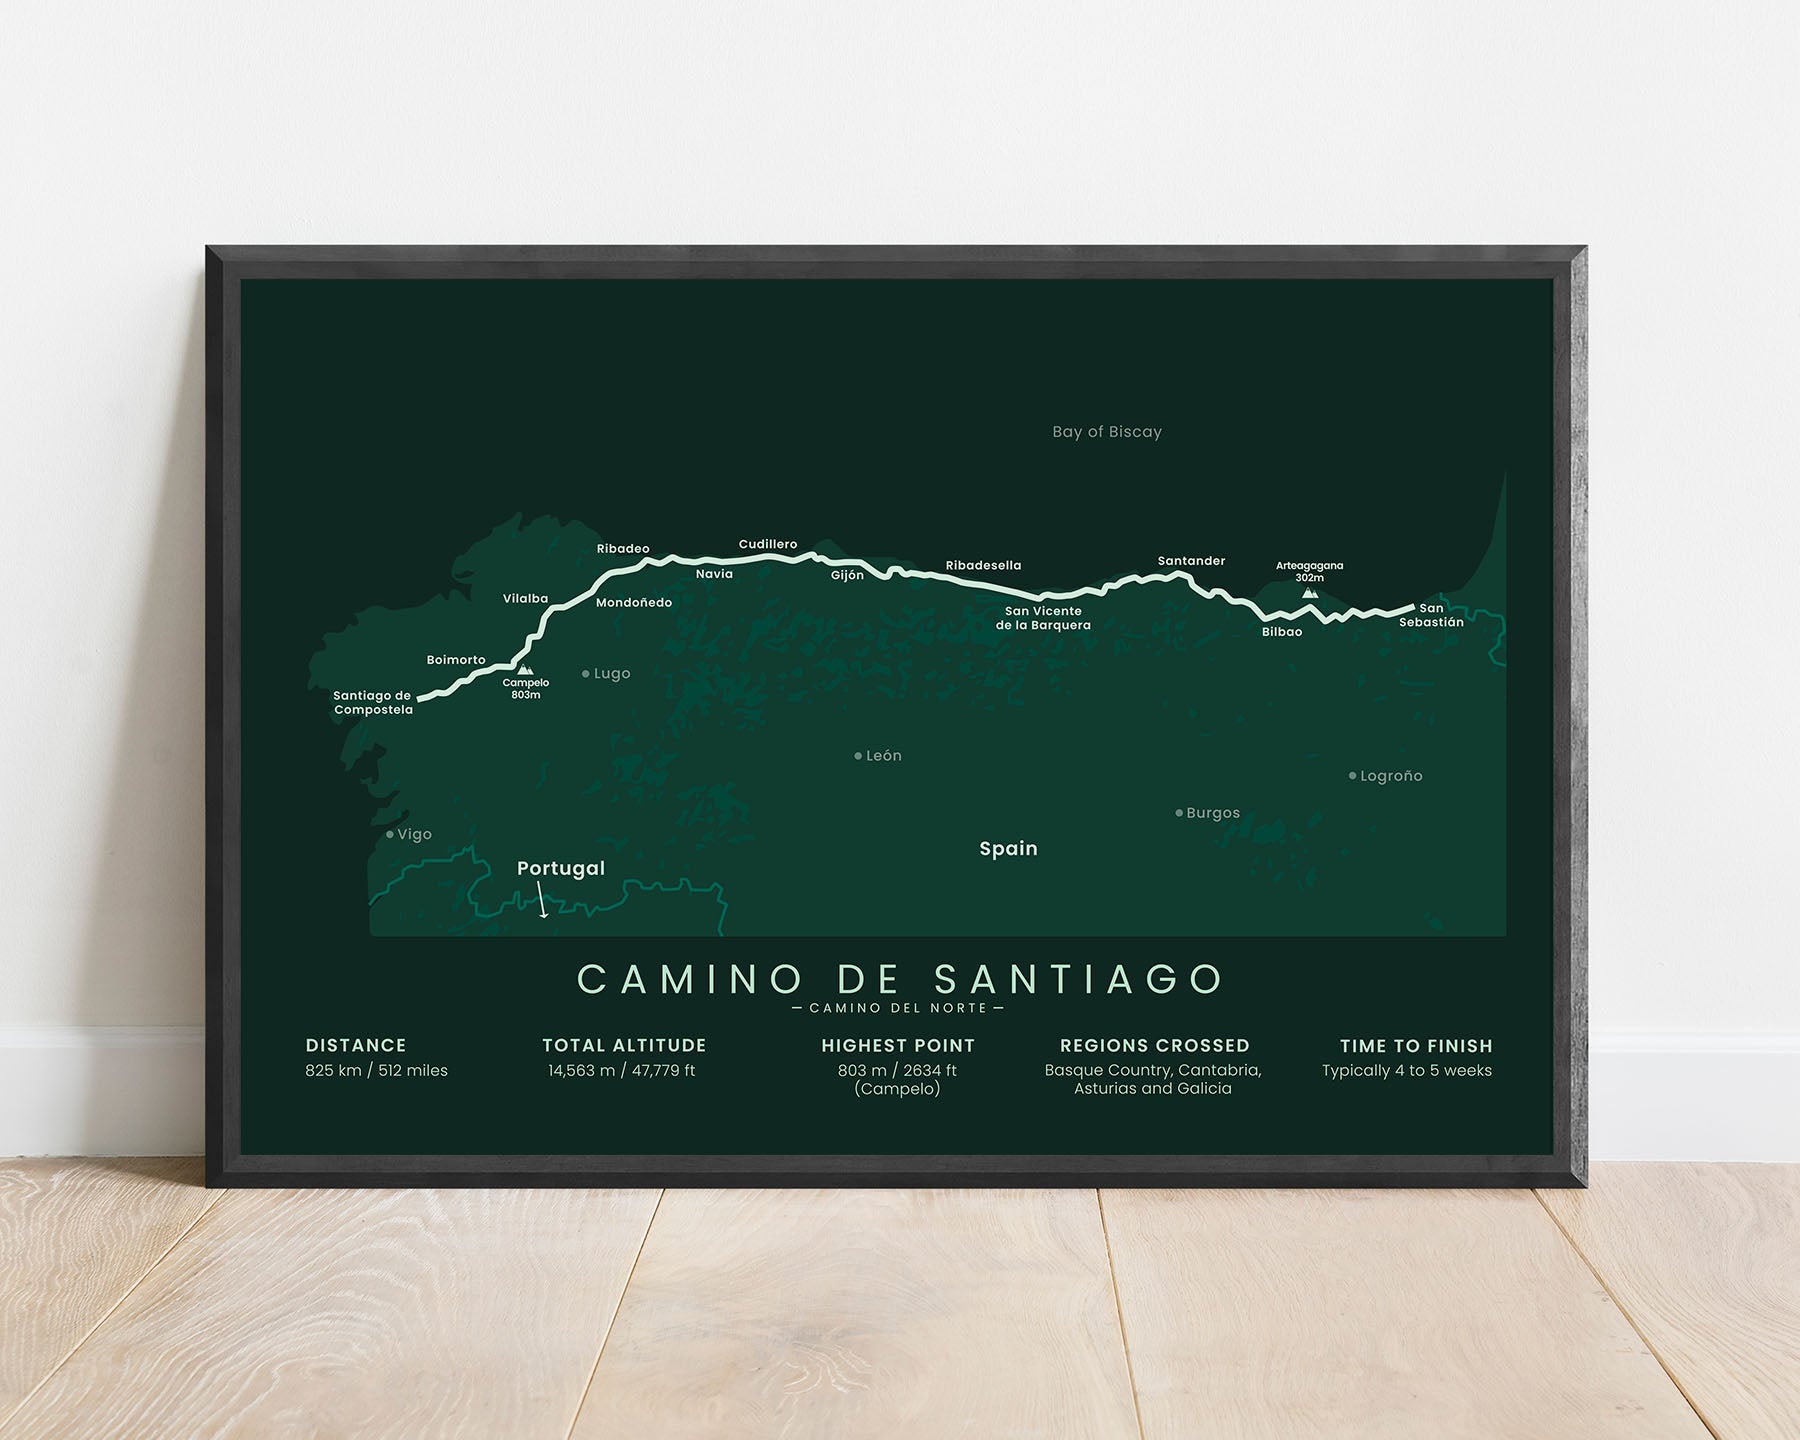 Camino del Norte (Spain) trek poster with green background